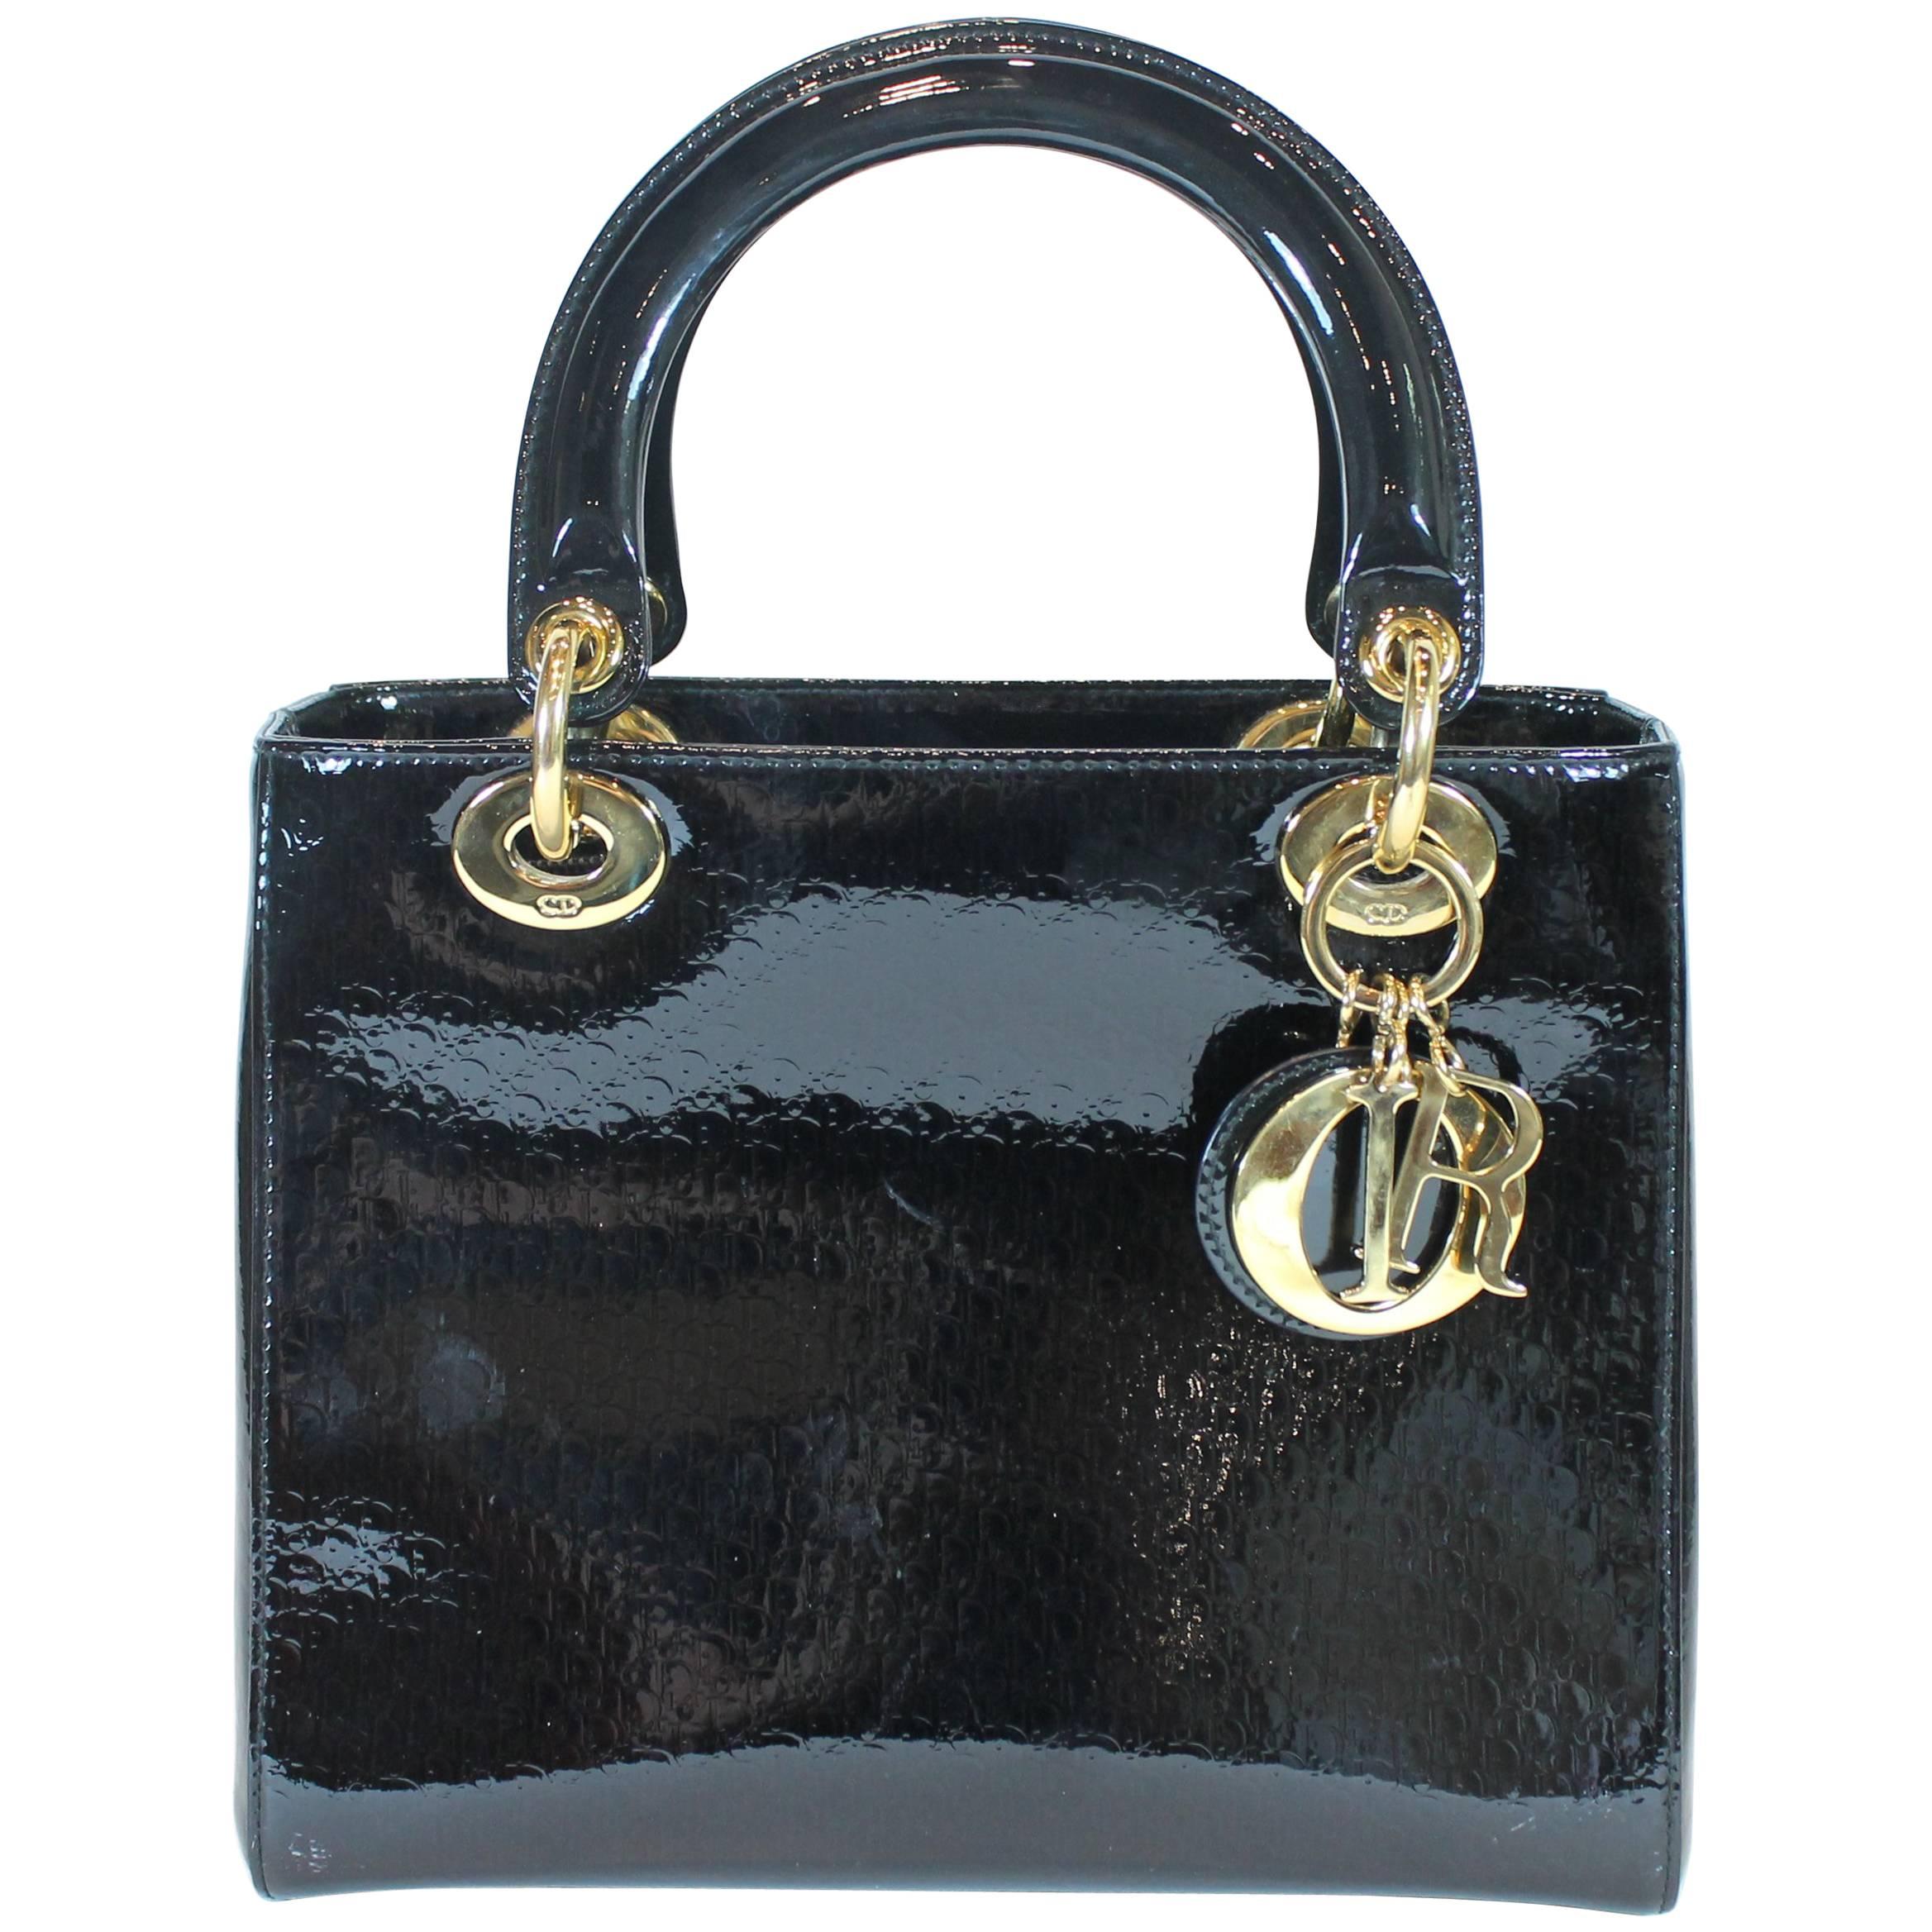 Lady Dior Black Patent leather Medium Bag